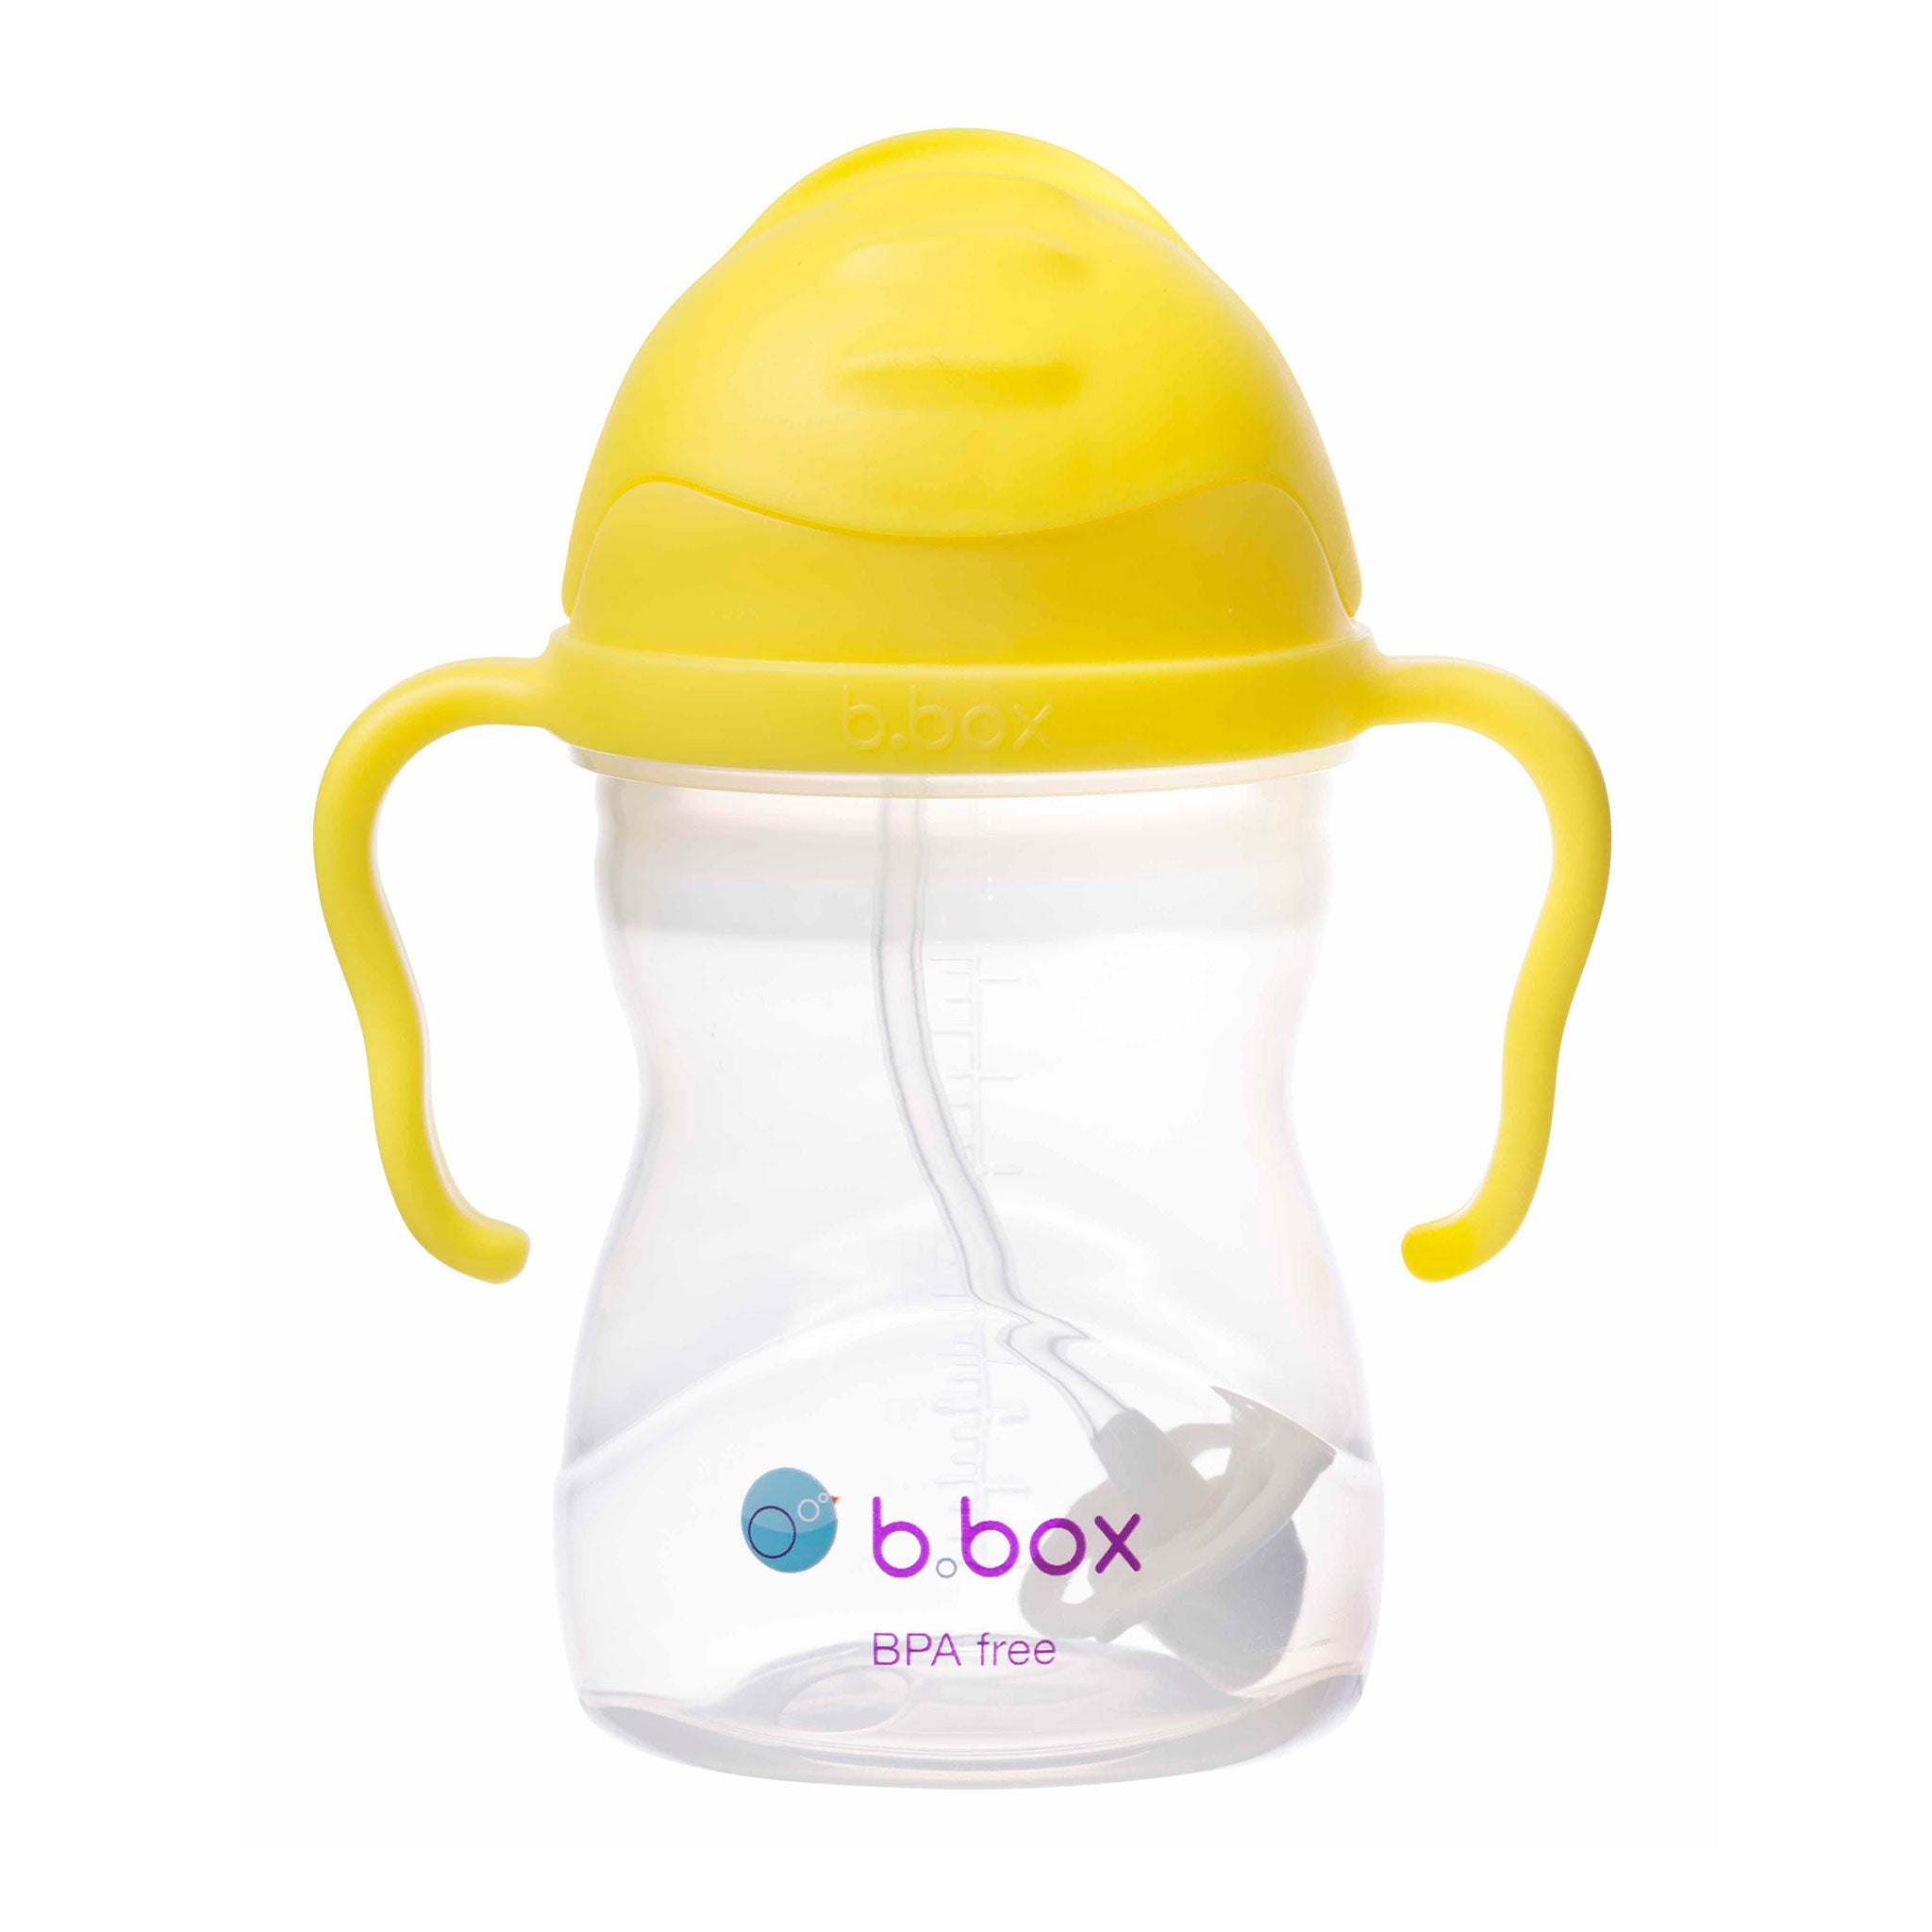 b.box Transition value pack ステップアップマグパック - lemon sippy cup